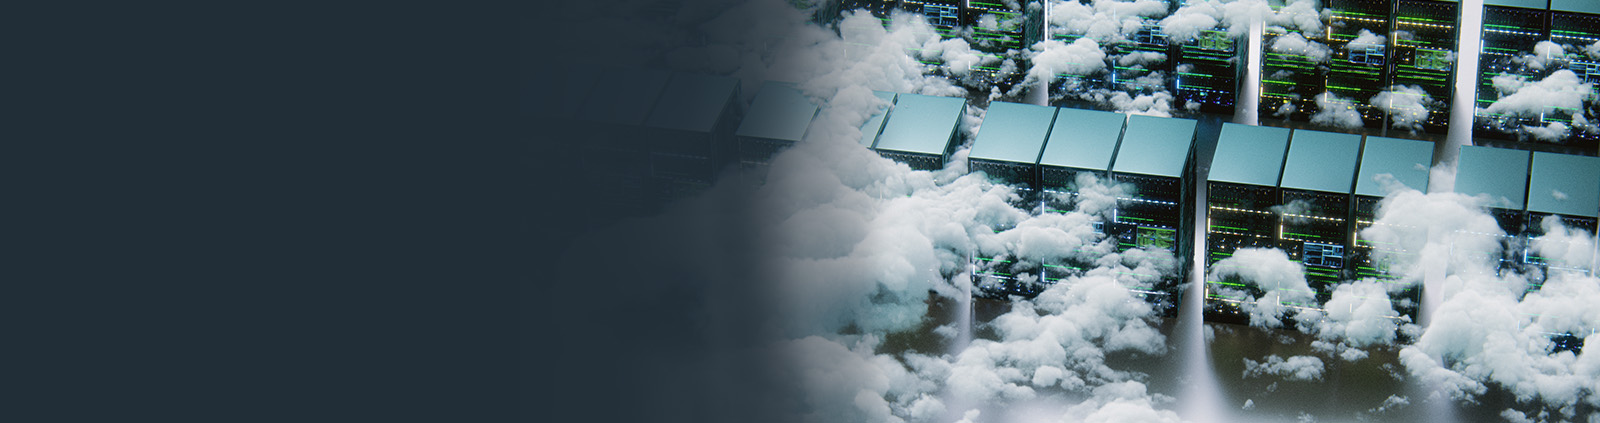 Clouds in Server Room Representing Cloud Security